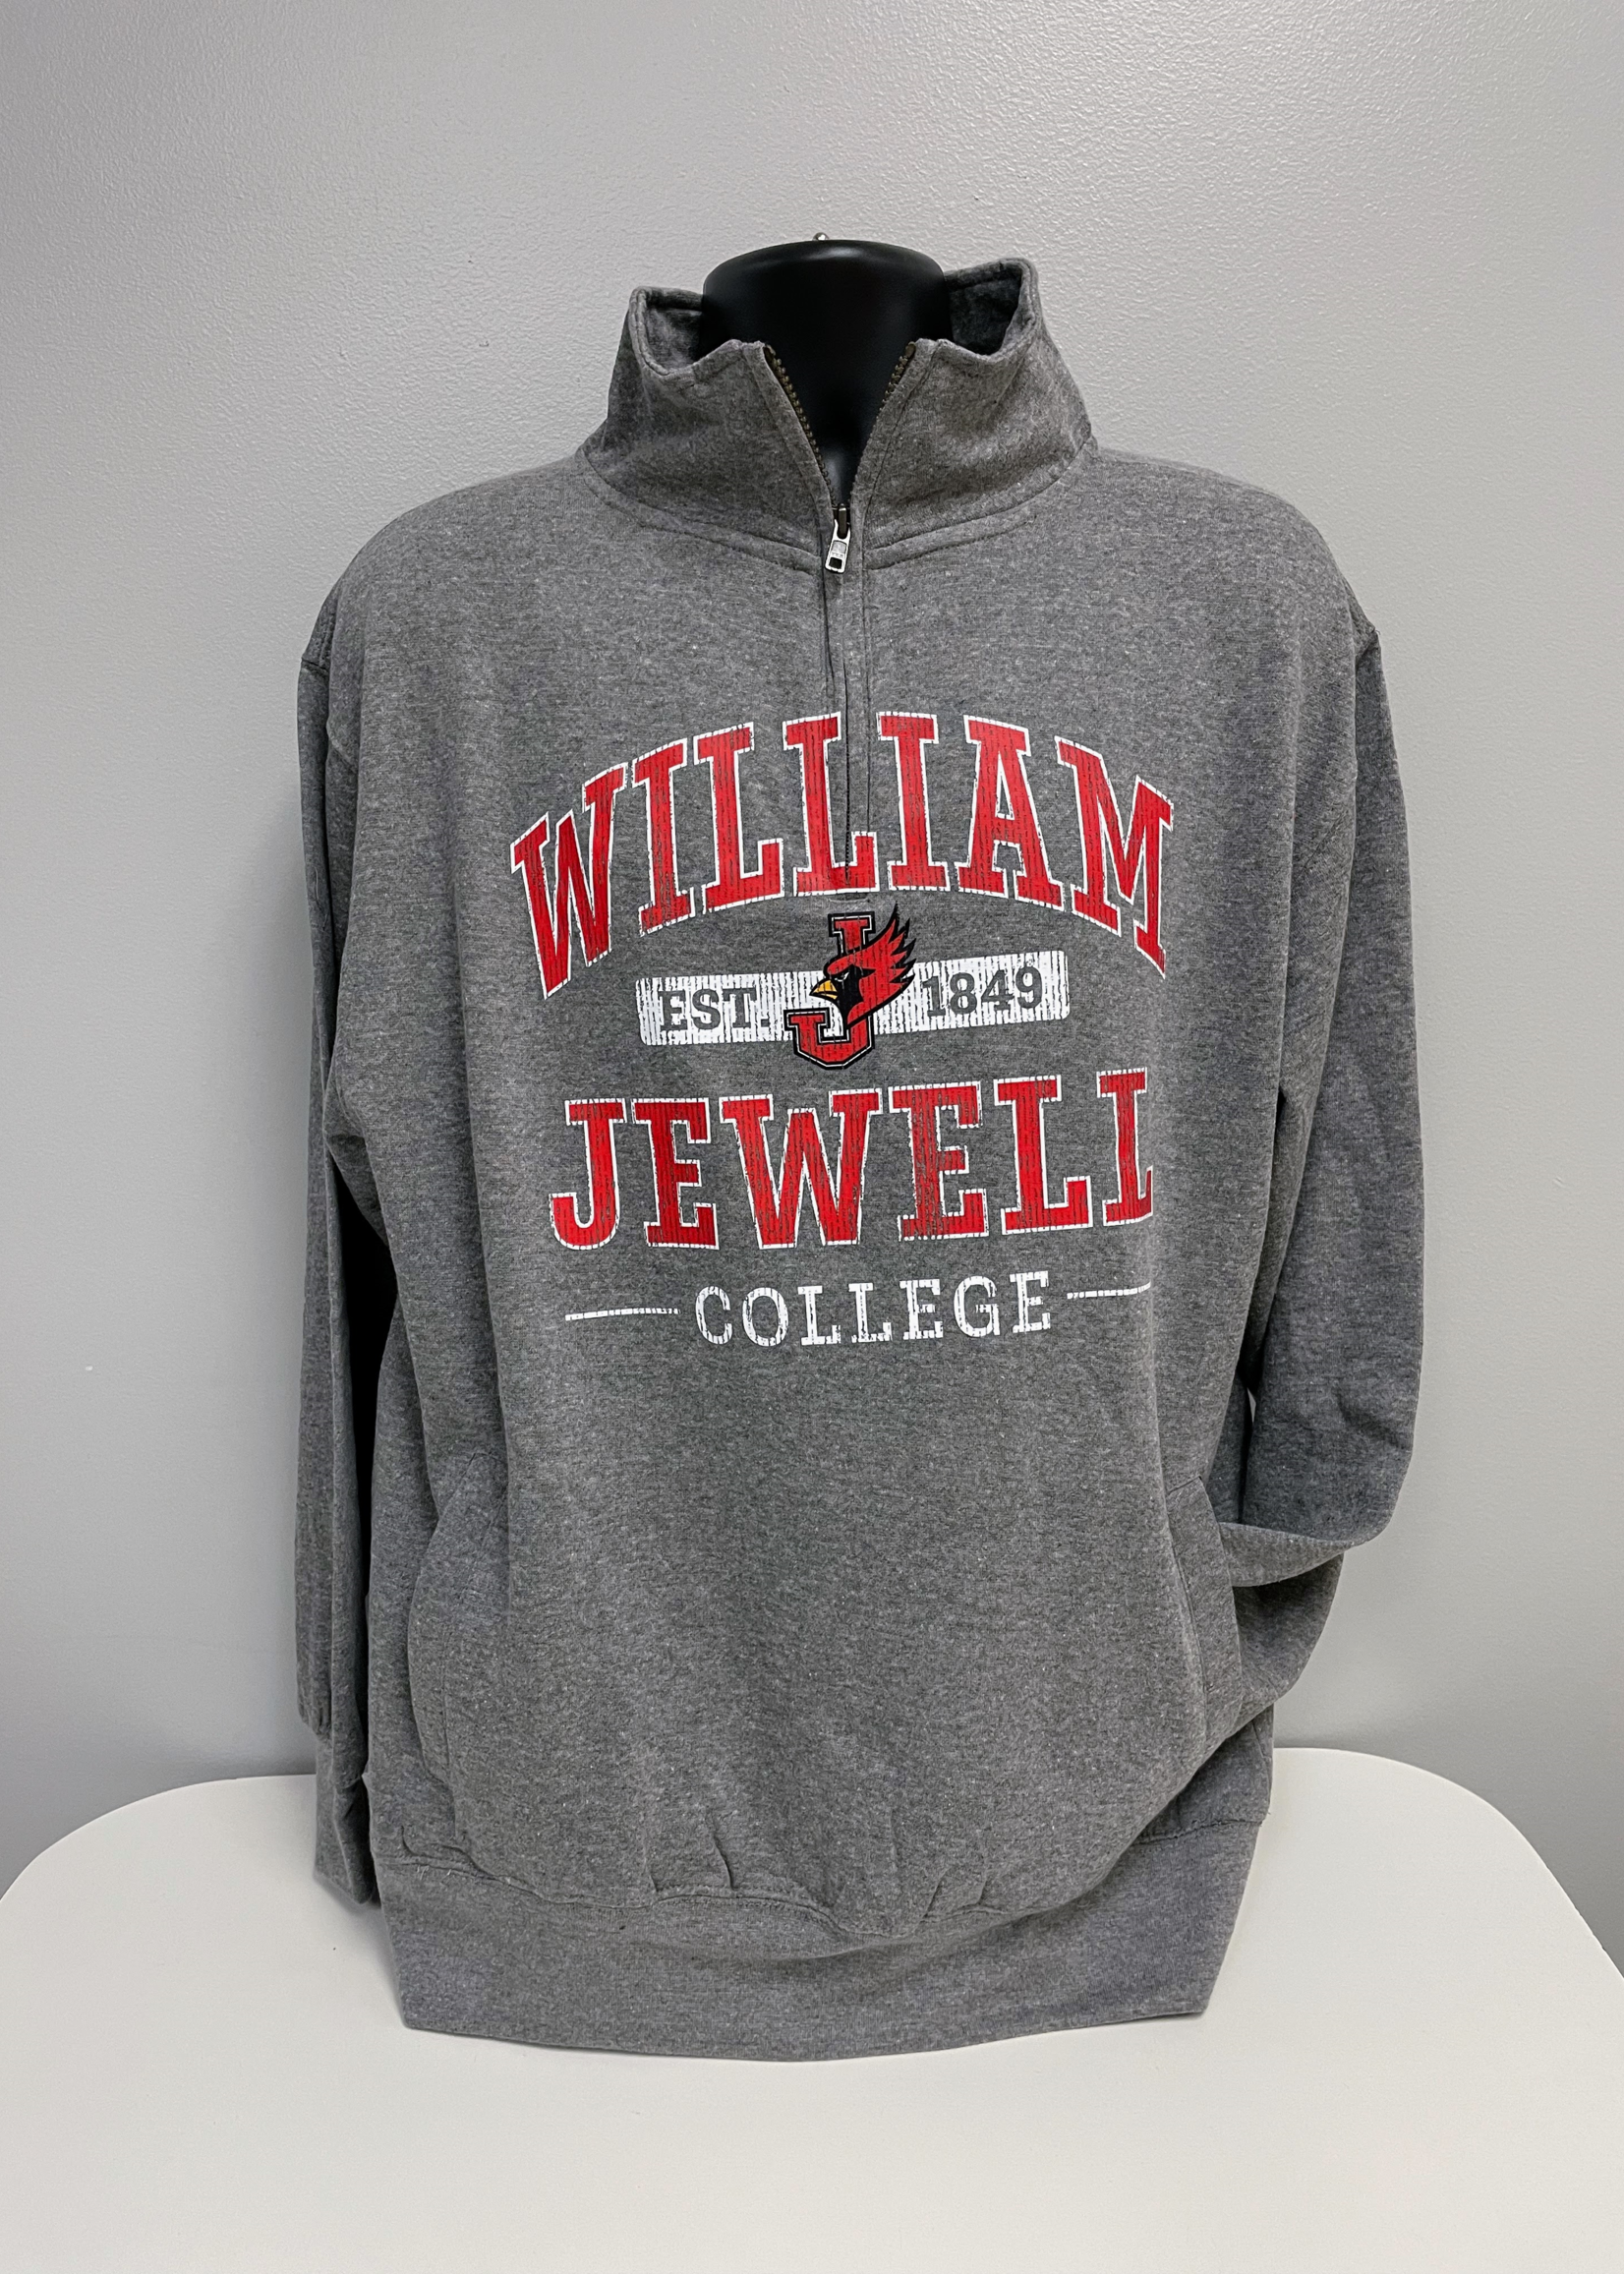 William Jewell College Sweatshirts